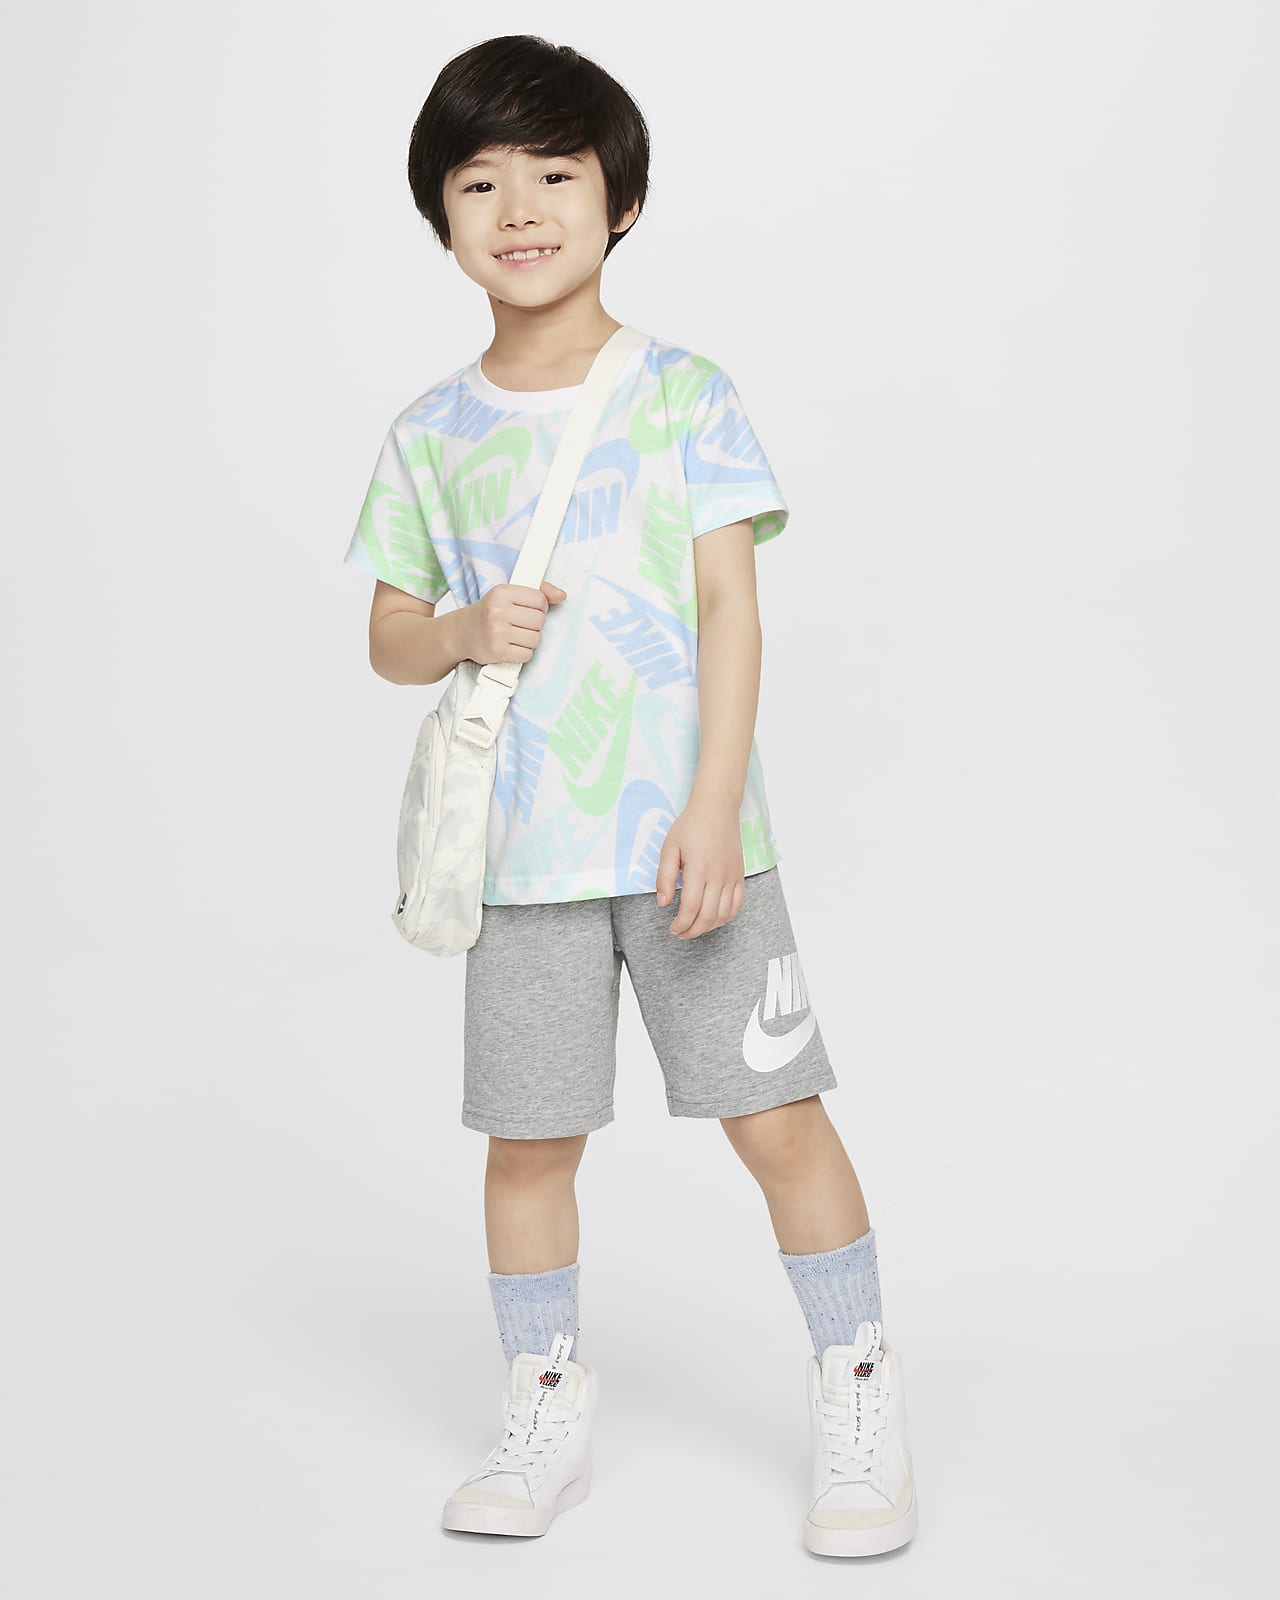 Nike Sportswear Little Kids T-Shirt and Shorts Set